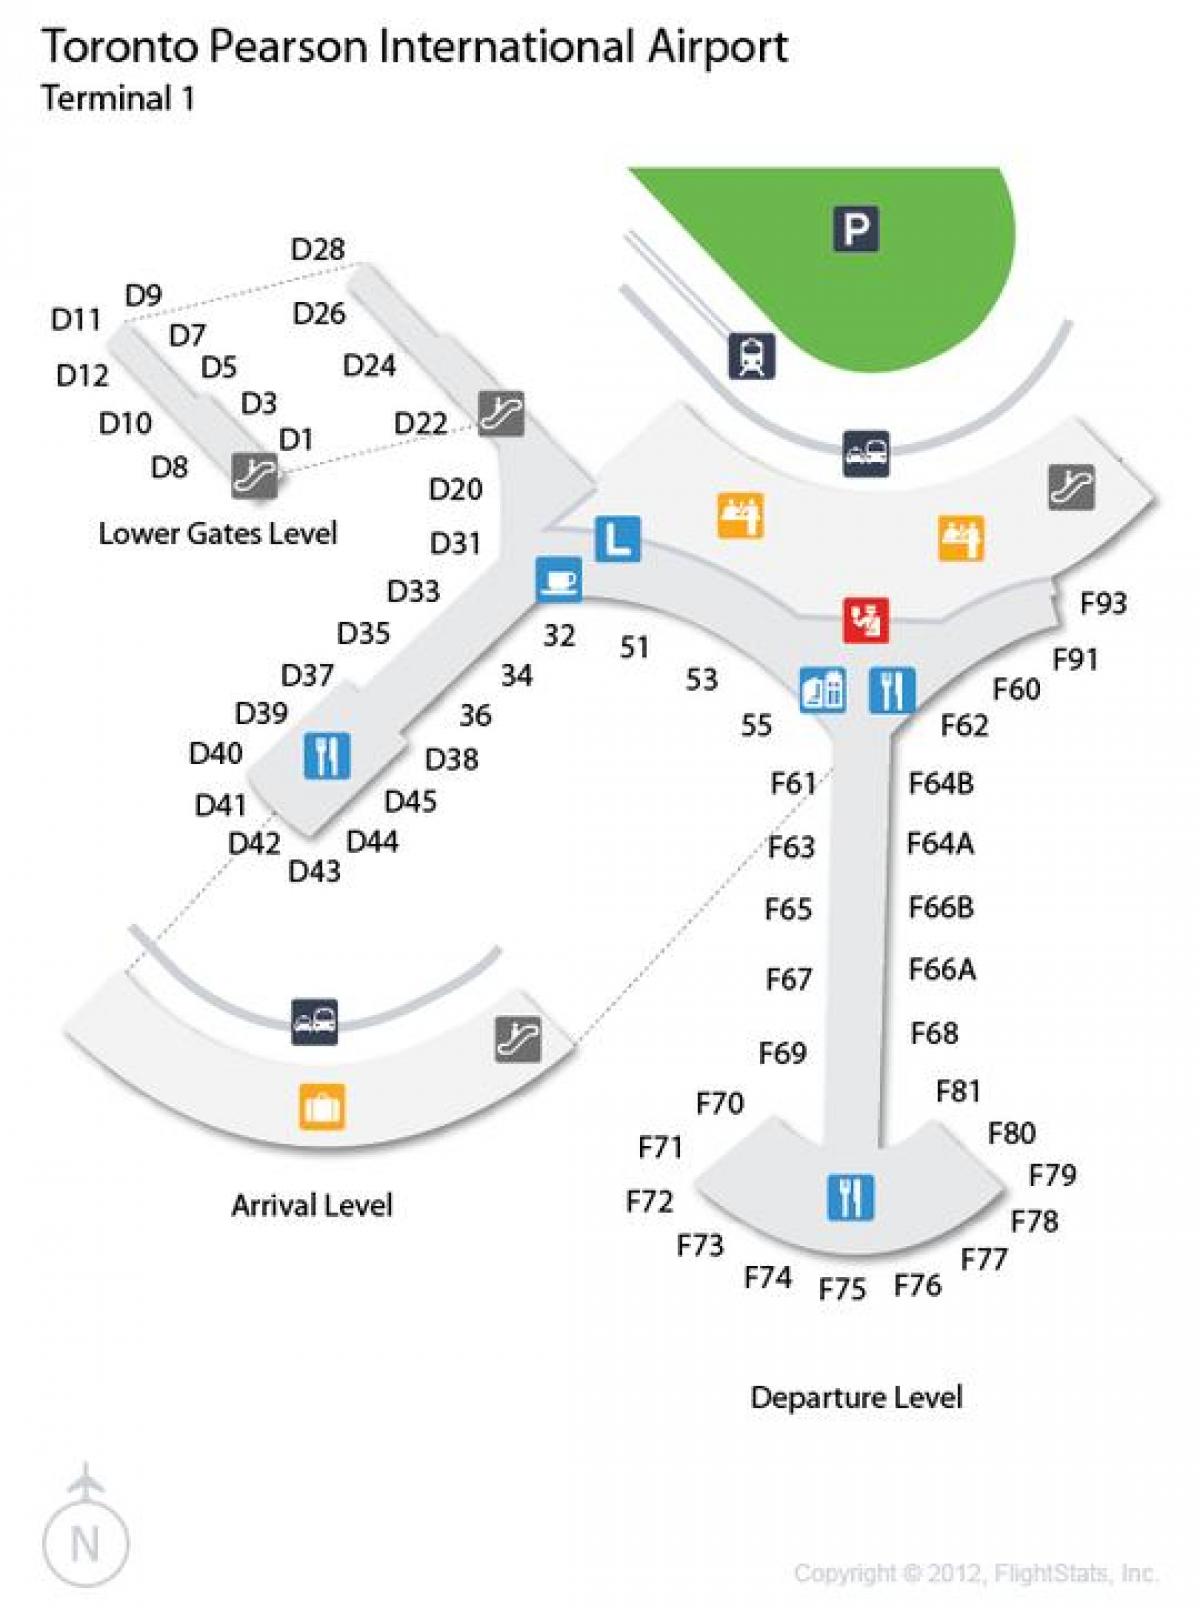 Peta dari Toronto Pearson international airport terminal 1